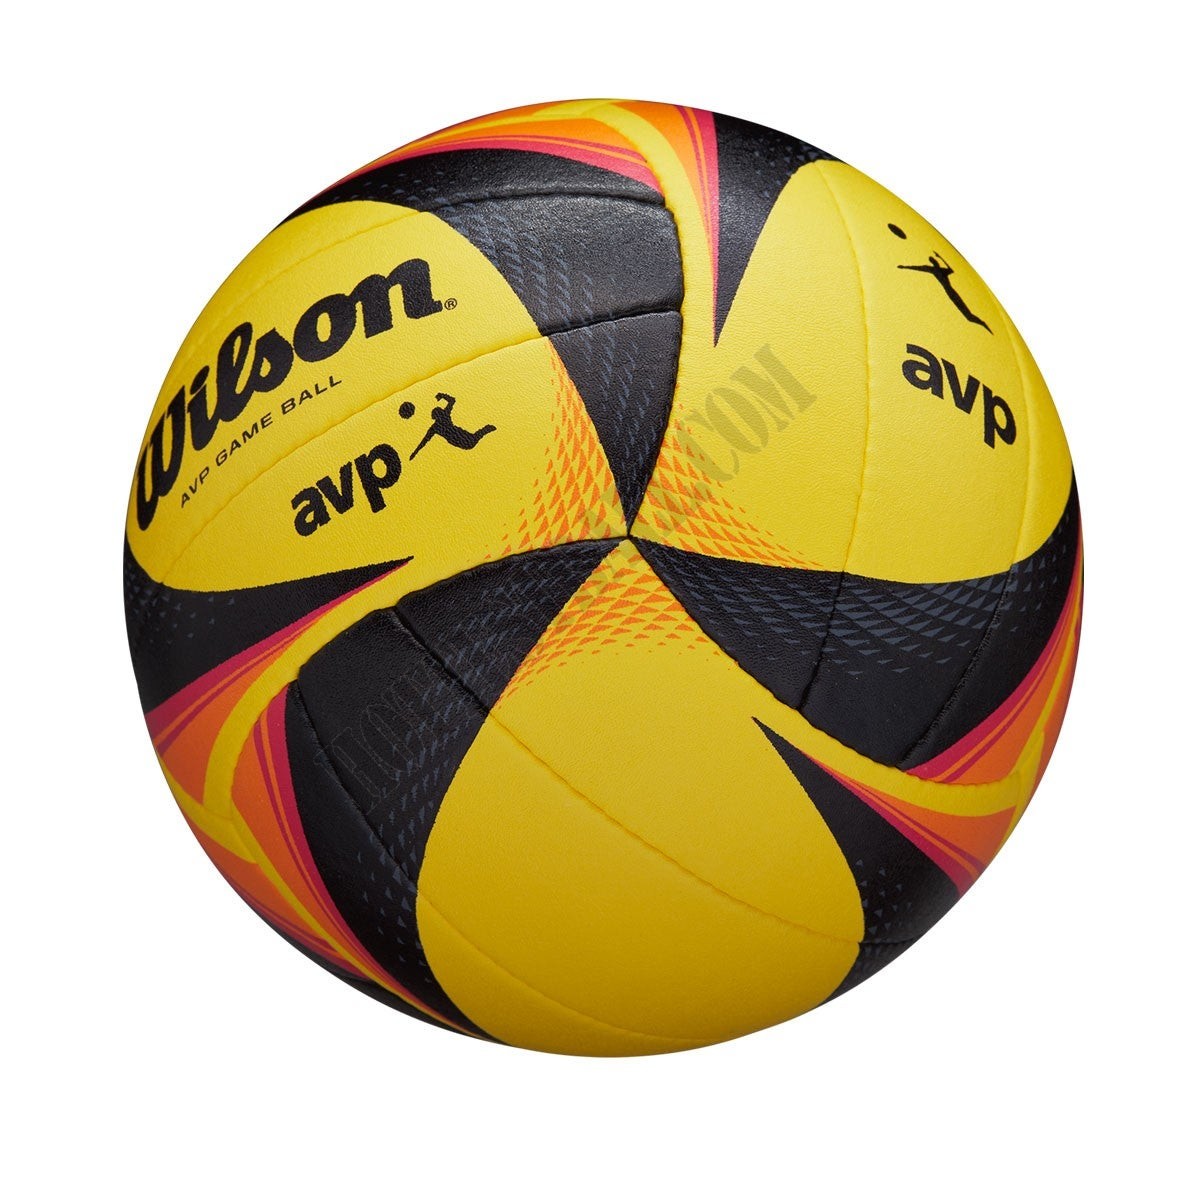 OPTX AVP Game Volleyball - Deflated - Wilson Discount Store - -3